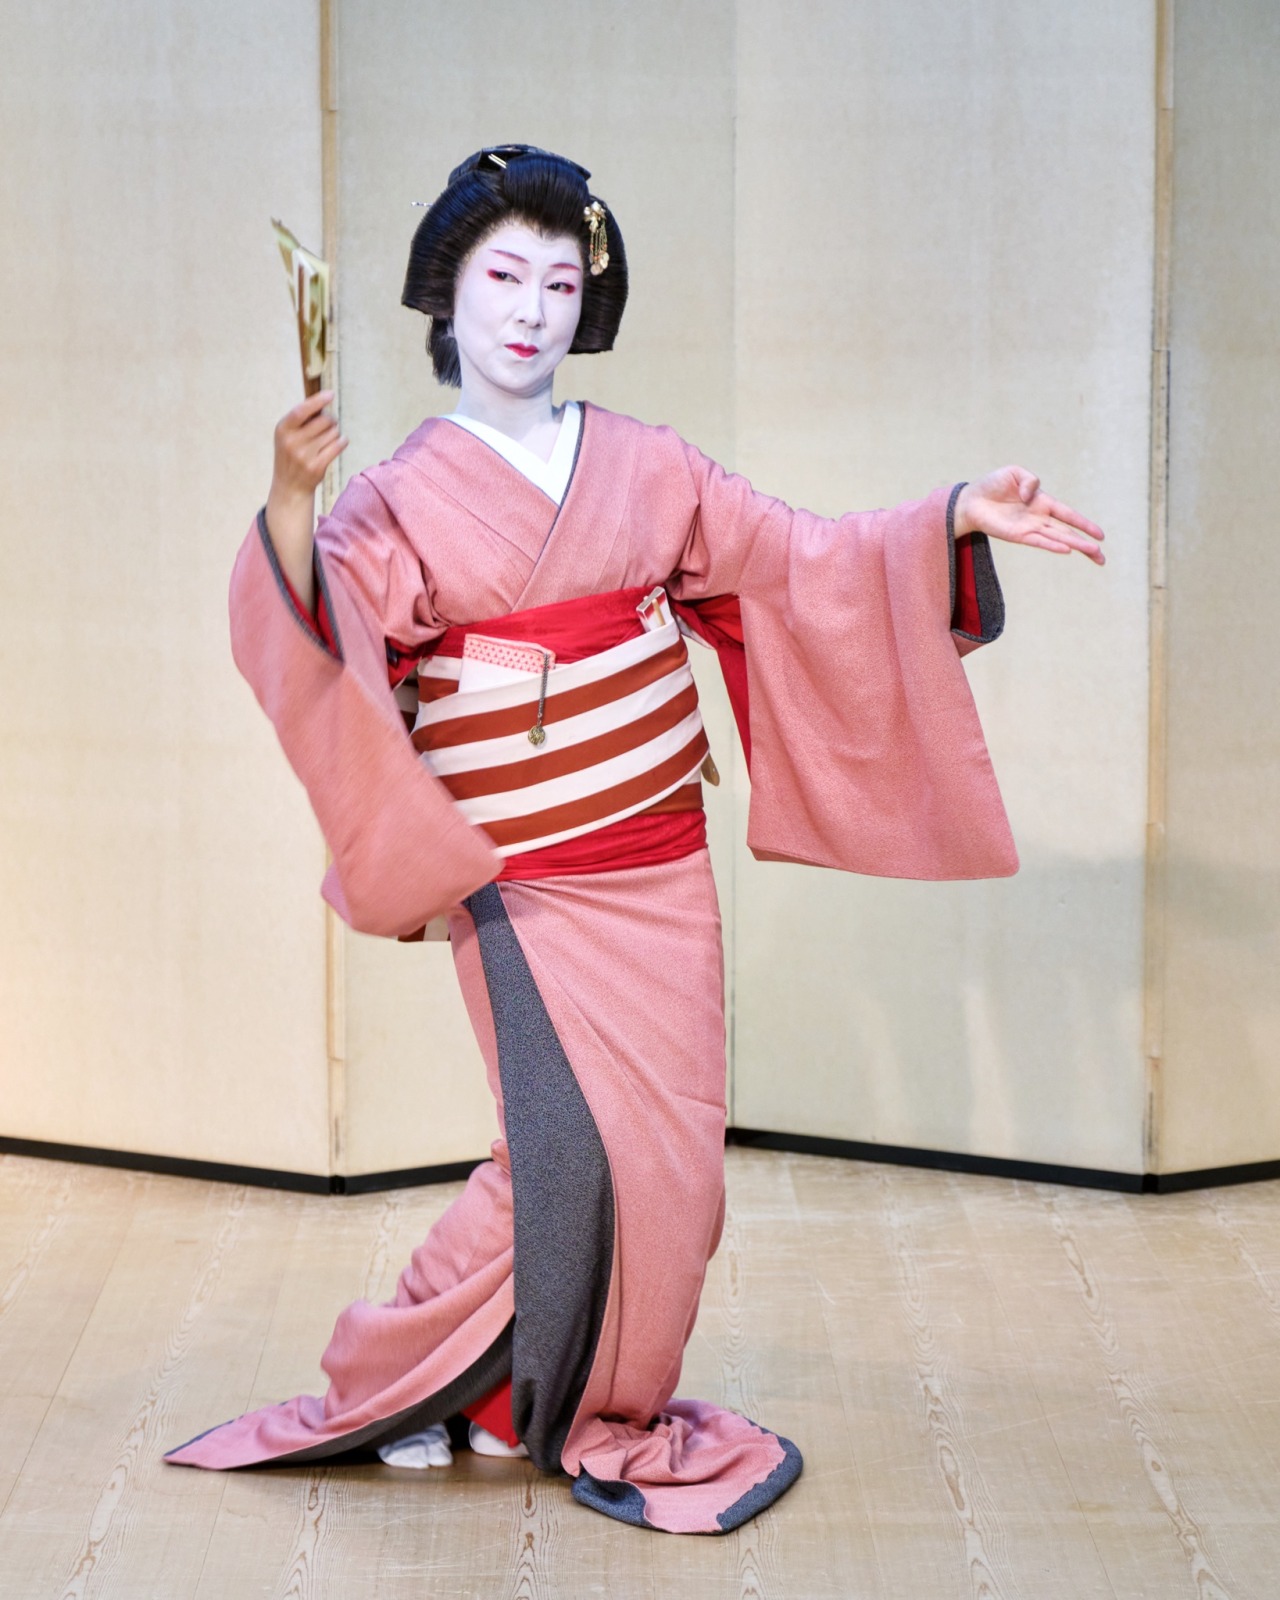 Geikotaku — Geisha Chihana of Asakusa More on my Instagram